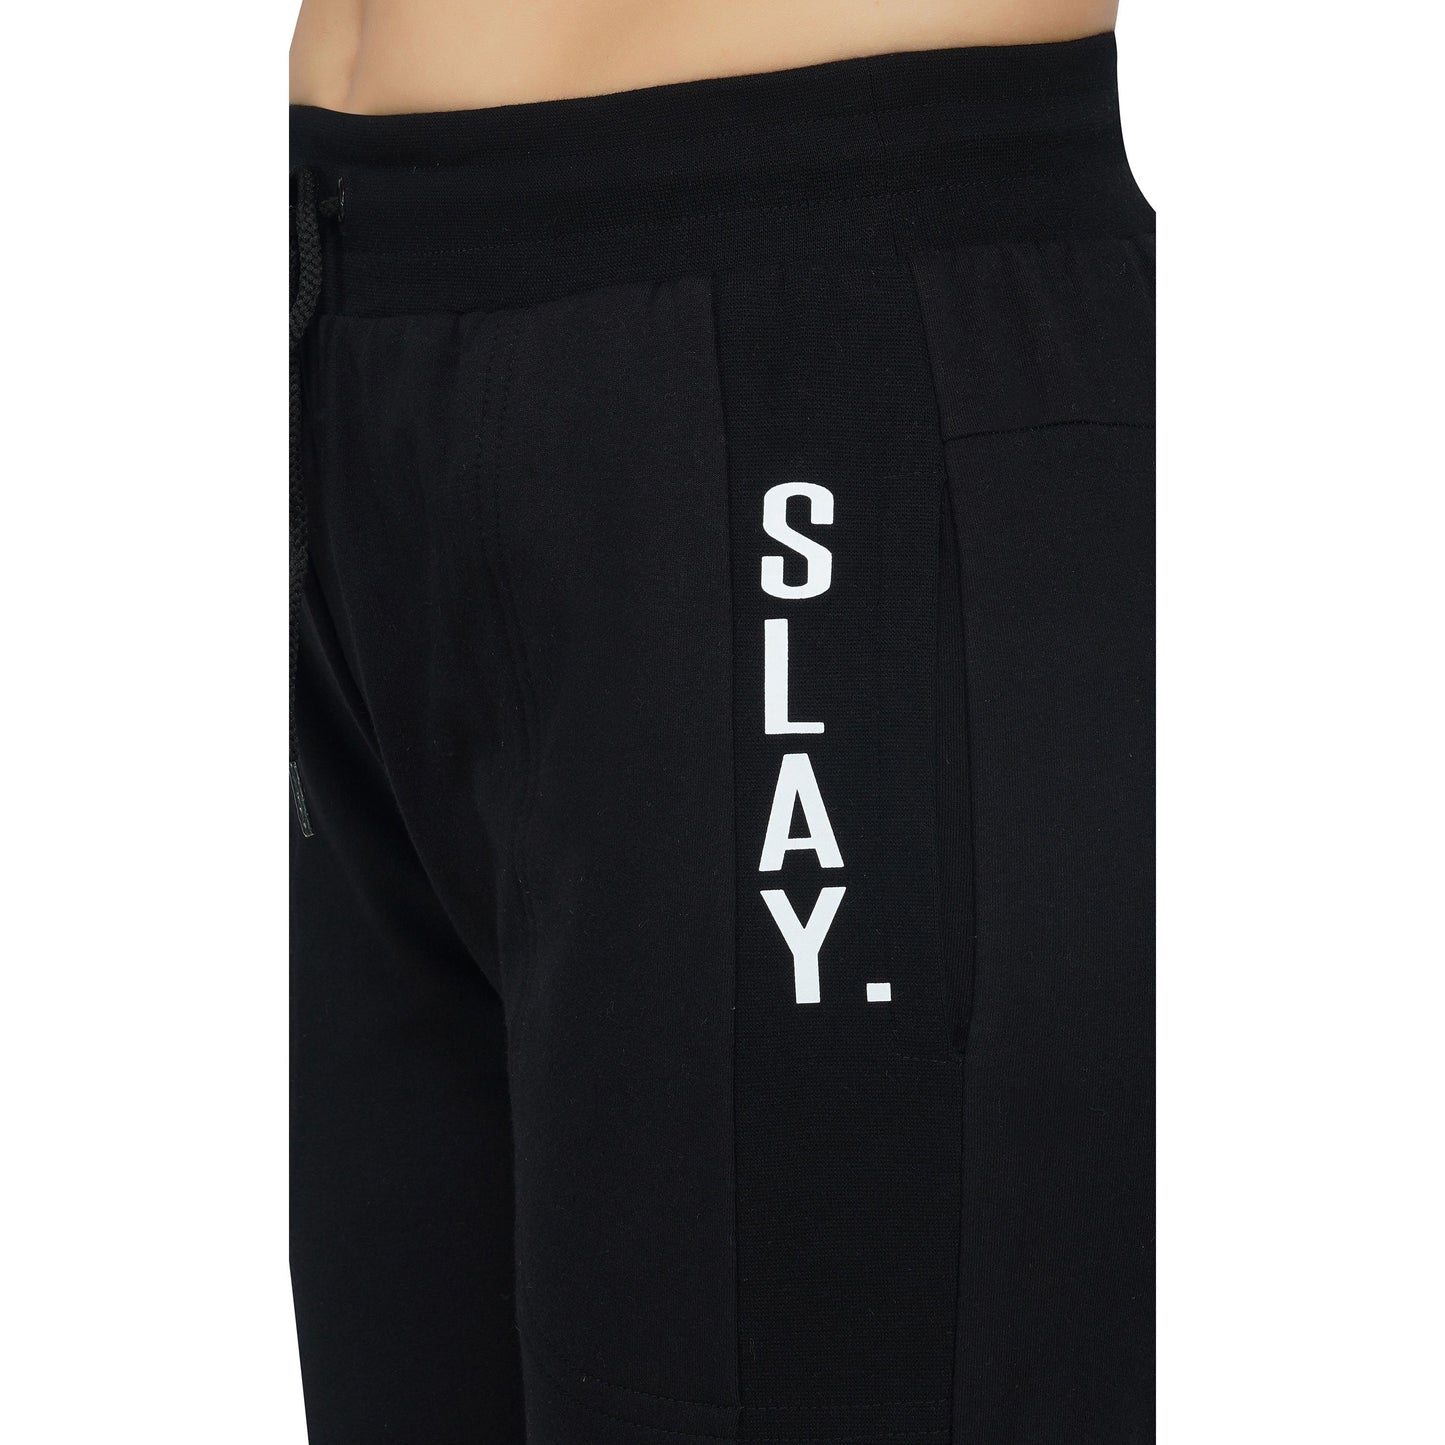 SLAY. Classic Women's Black Joggers Pants-clothing-to-slay.myshopify.com-Joggers